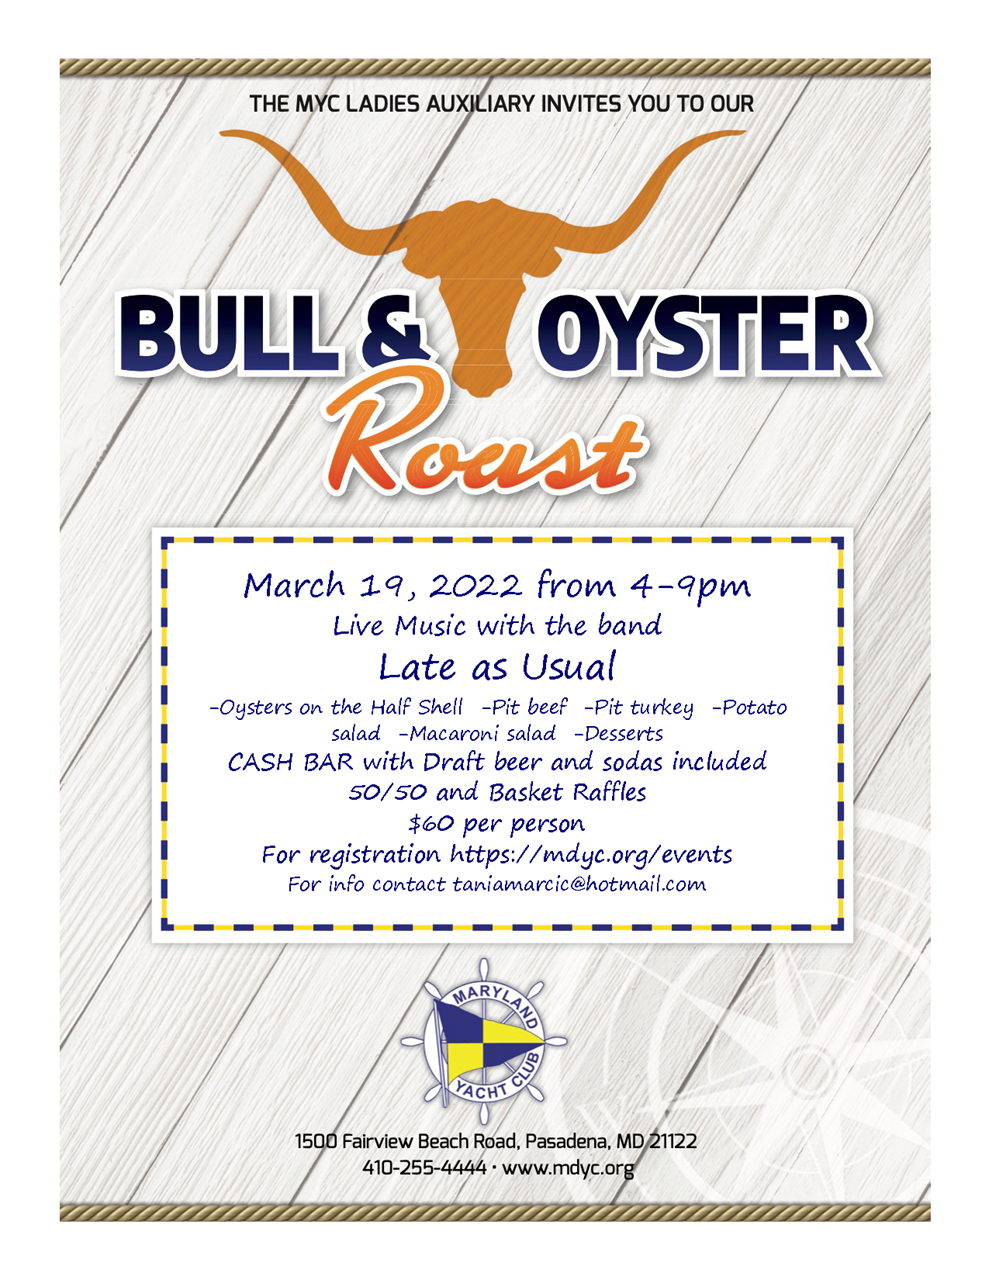 Maryland Yacht Club - Bull & Oyster Roast